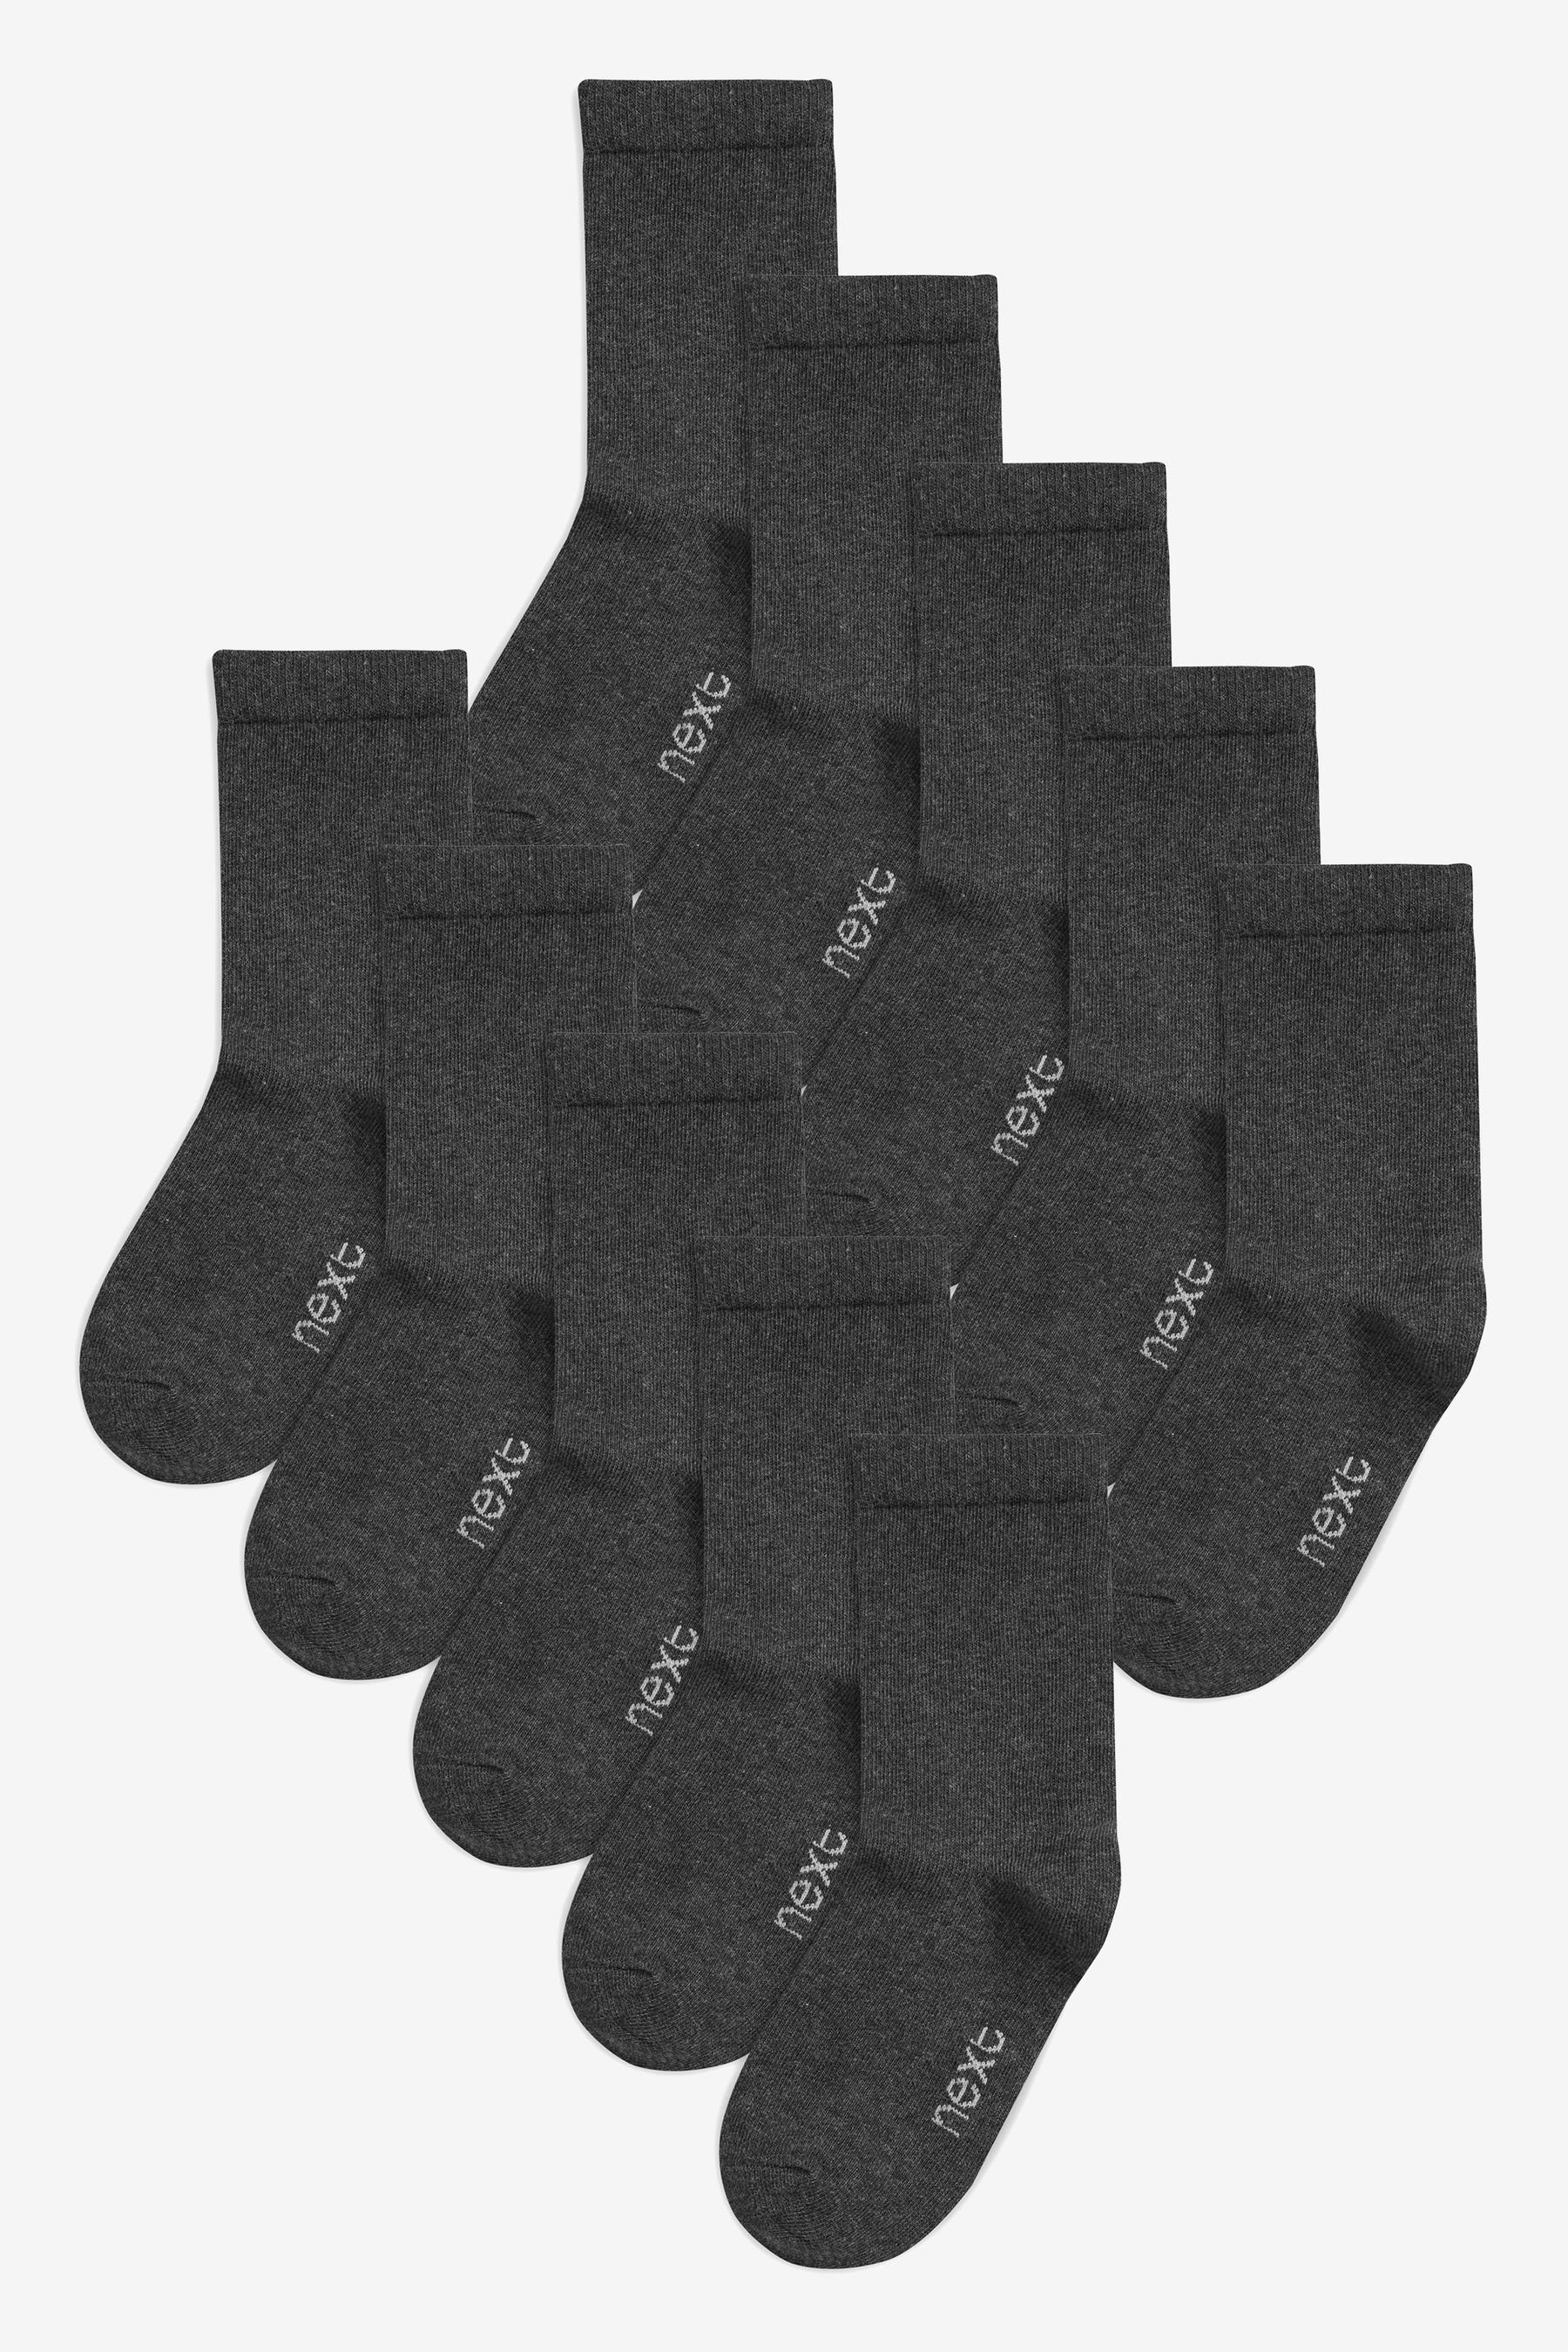 Next Kurzsocken 10er-Pack hohem (1-Paar) Grey mit Baumwollanteil, Socken